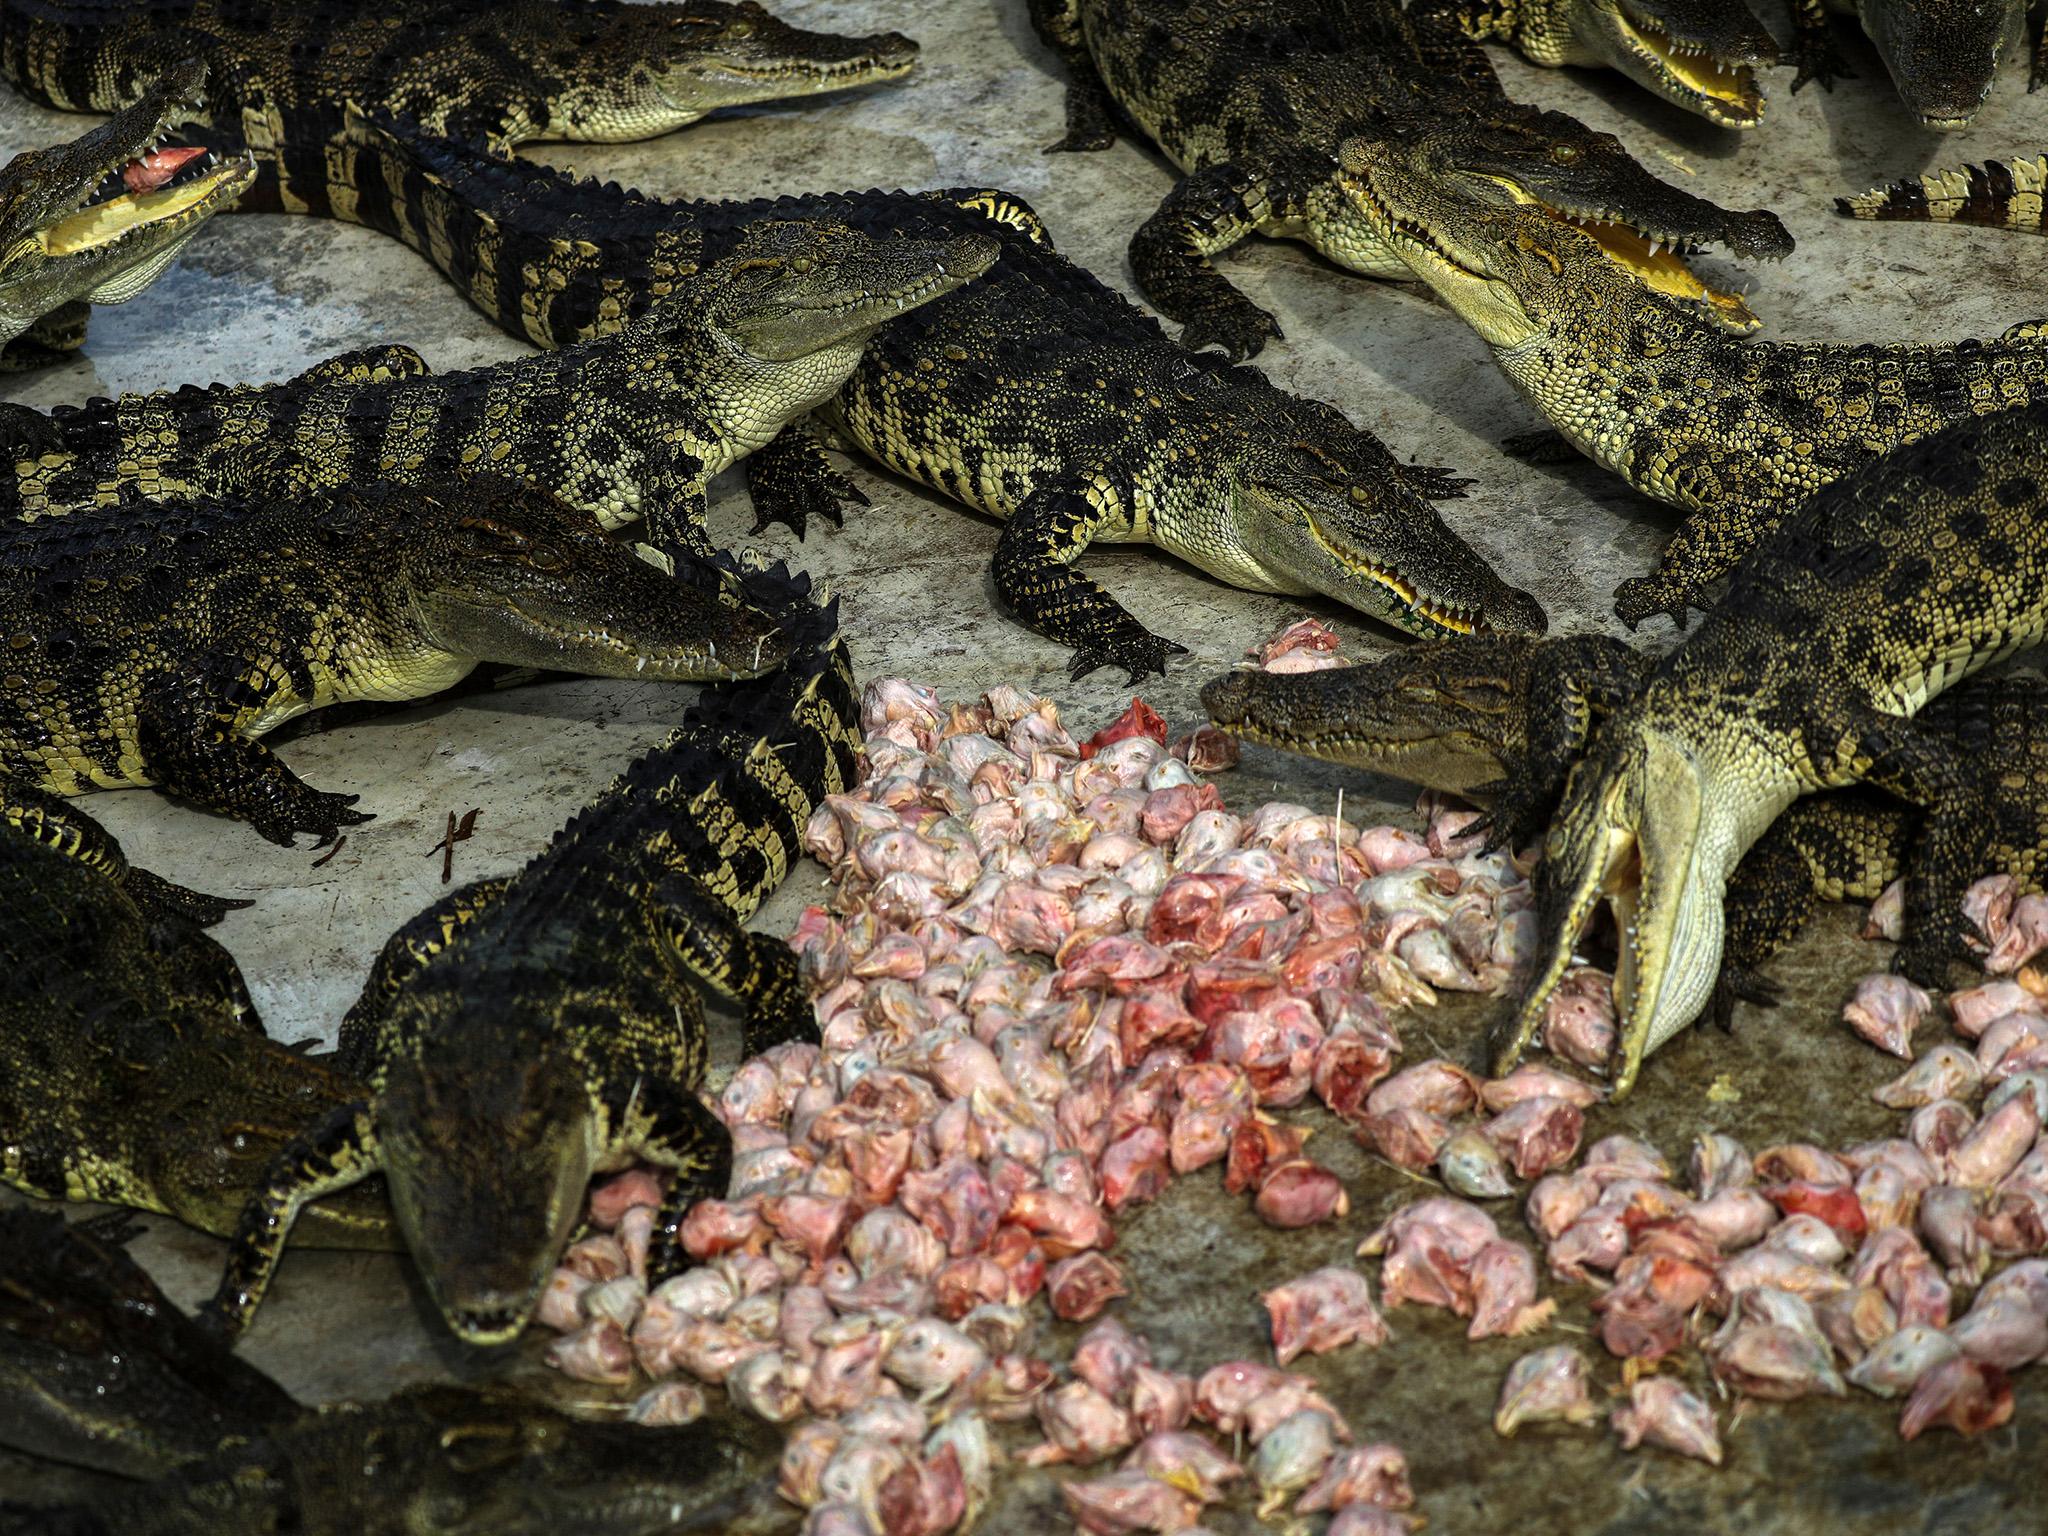 Crocodiles eat chicken heads at Sriracha Tiger Zoo in Chonburi province